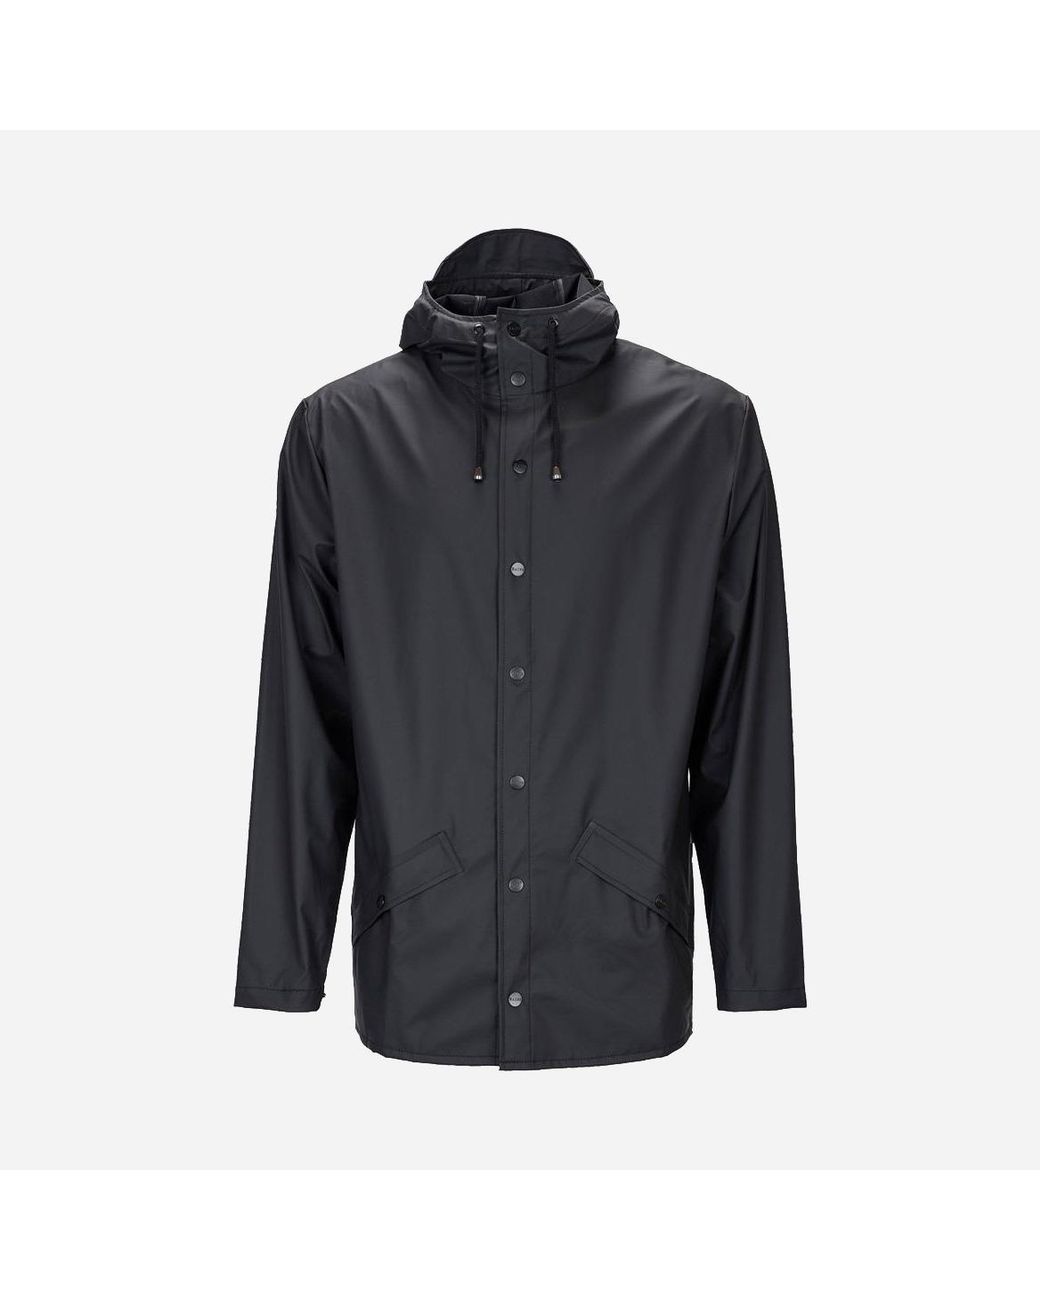 Rains Unisex Black Jacket Raincoat in Black for Men - Lyst